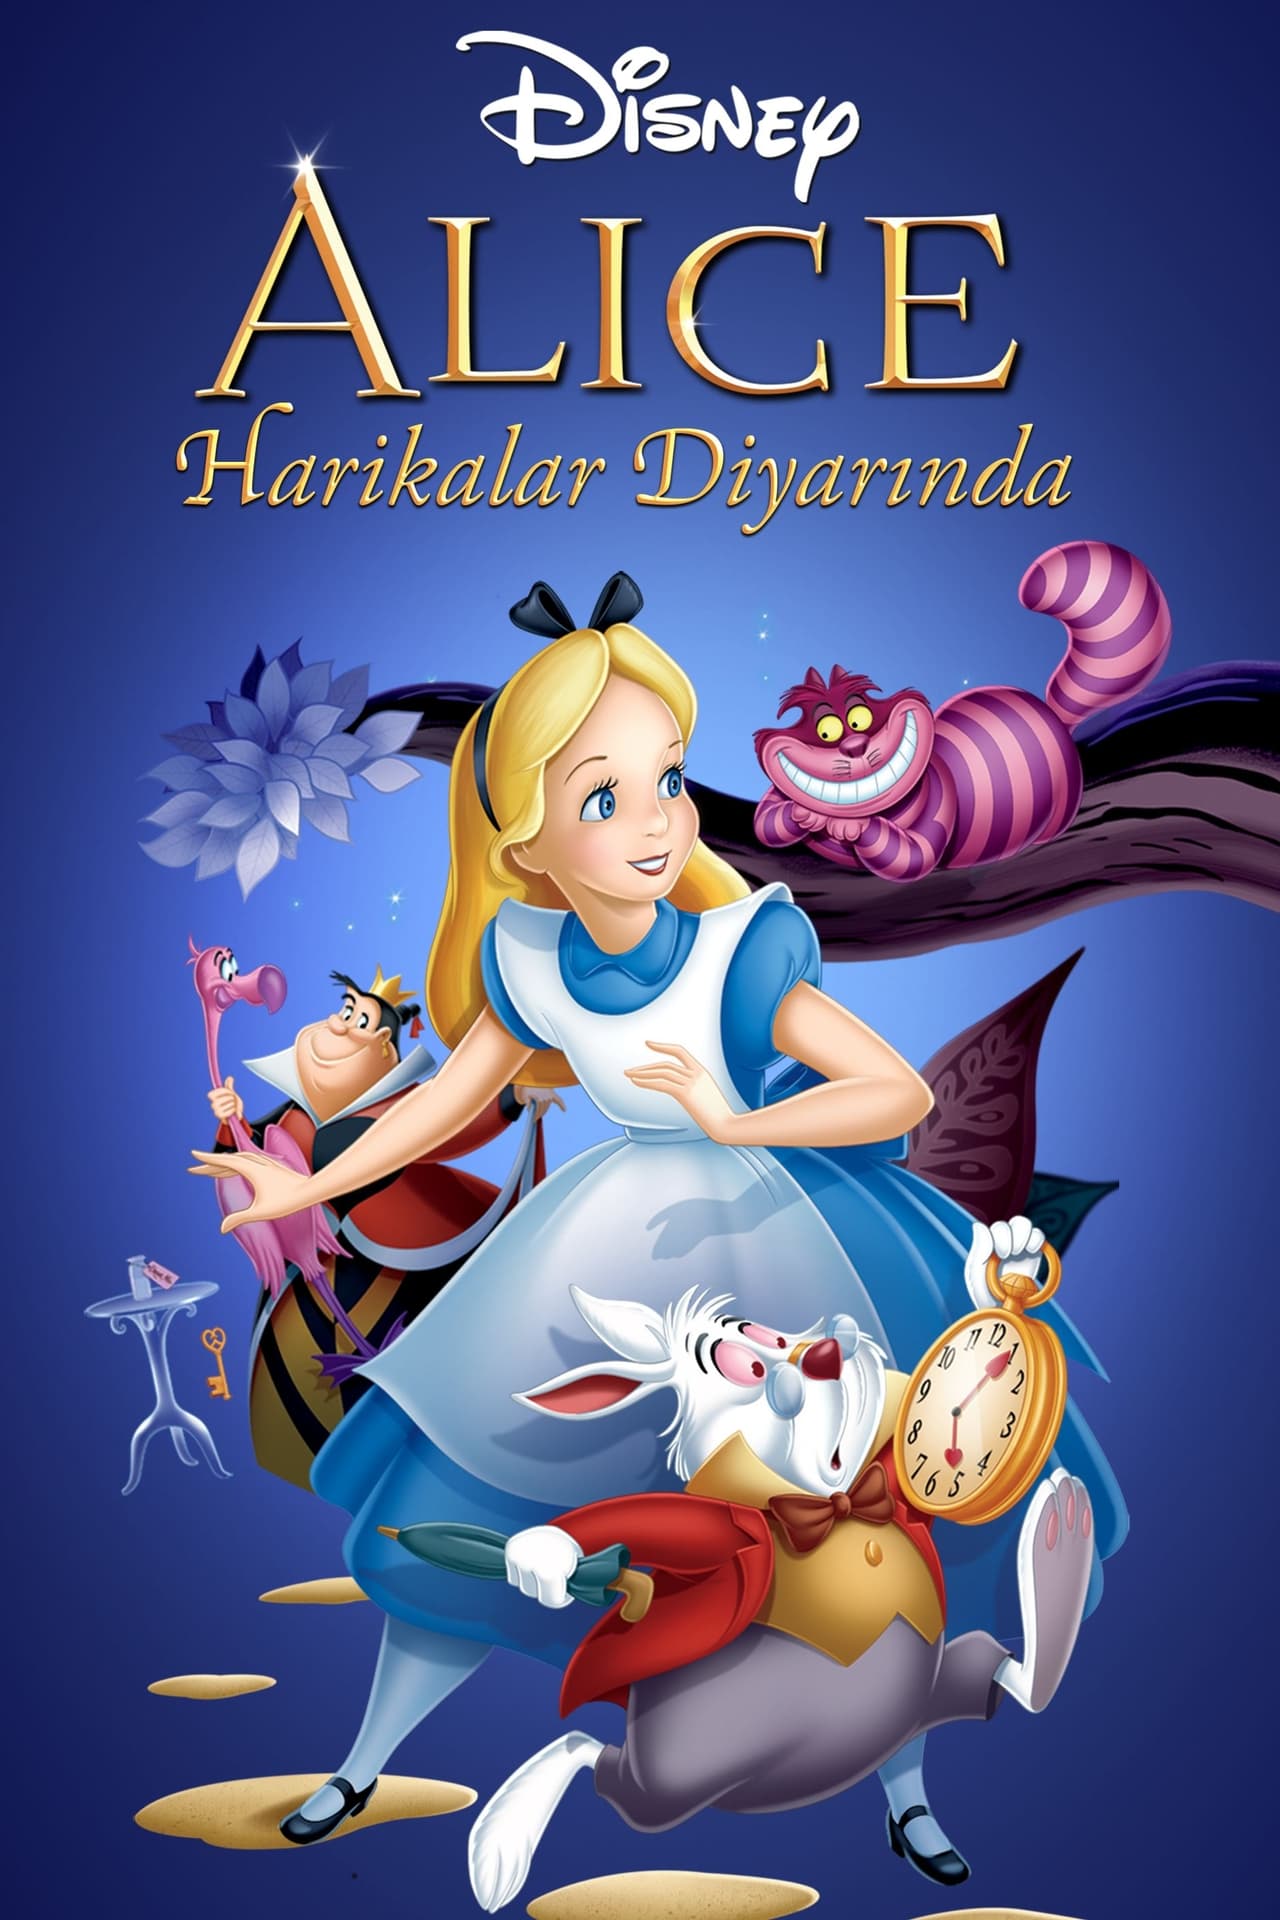 Alice in Wonderland (1951) 256Kbps 23.976Fps 48Khz 5.1Ch Disney+ DD+ E-AC3 Turkish Audio TAC